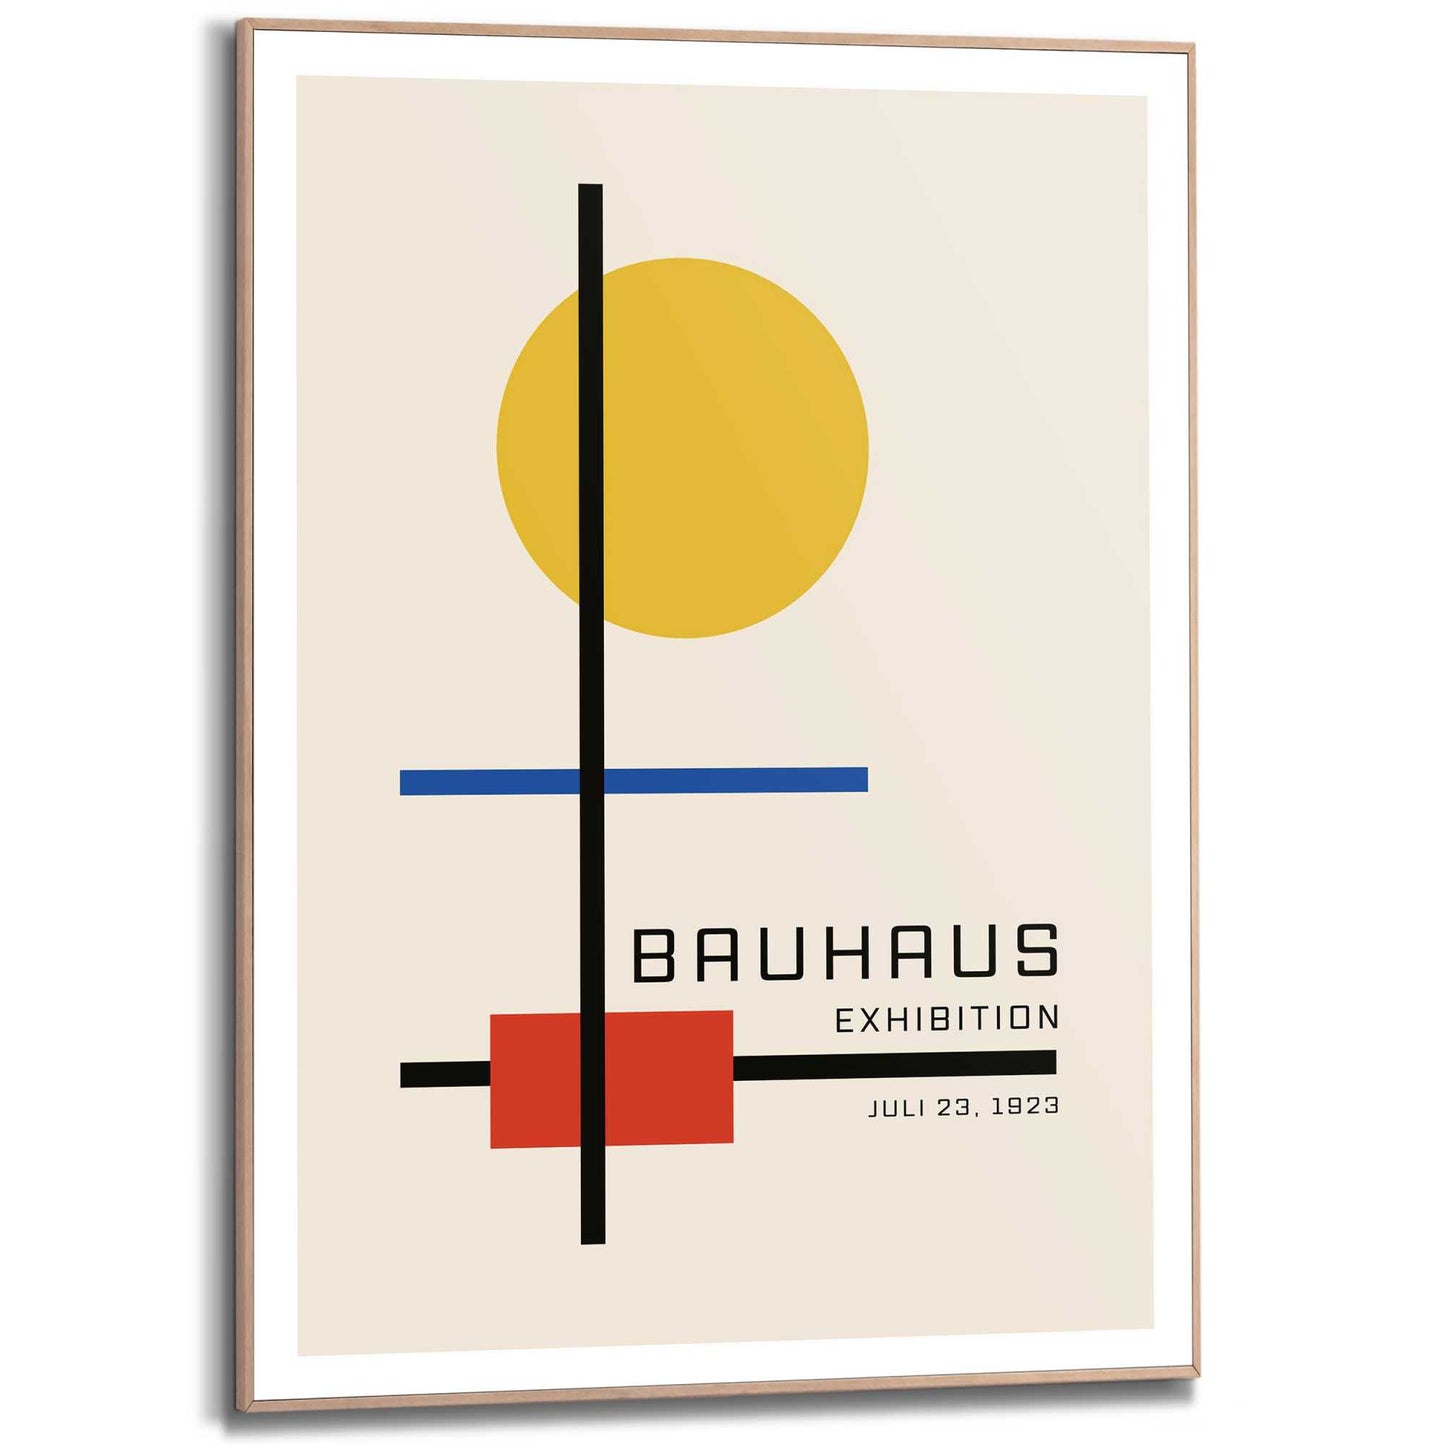 Framed in Wood Bauhaus - exhibition 70x50